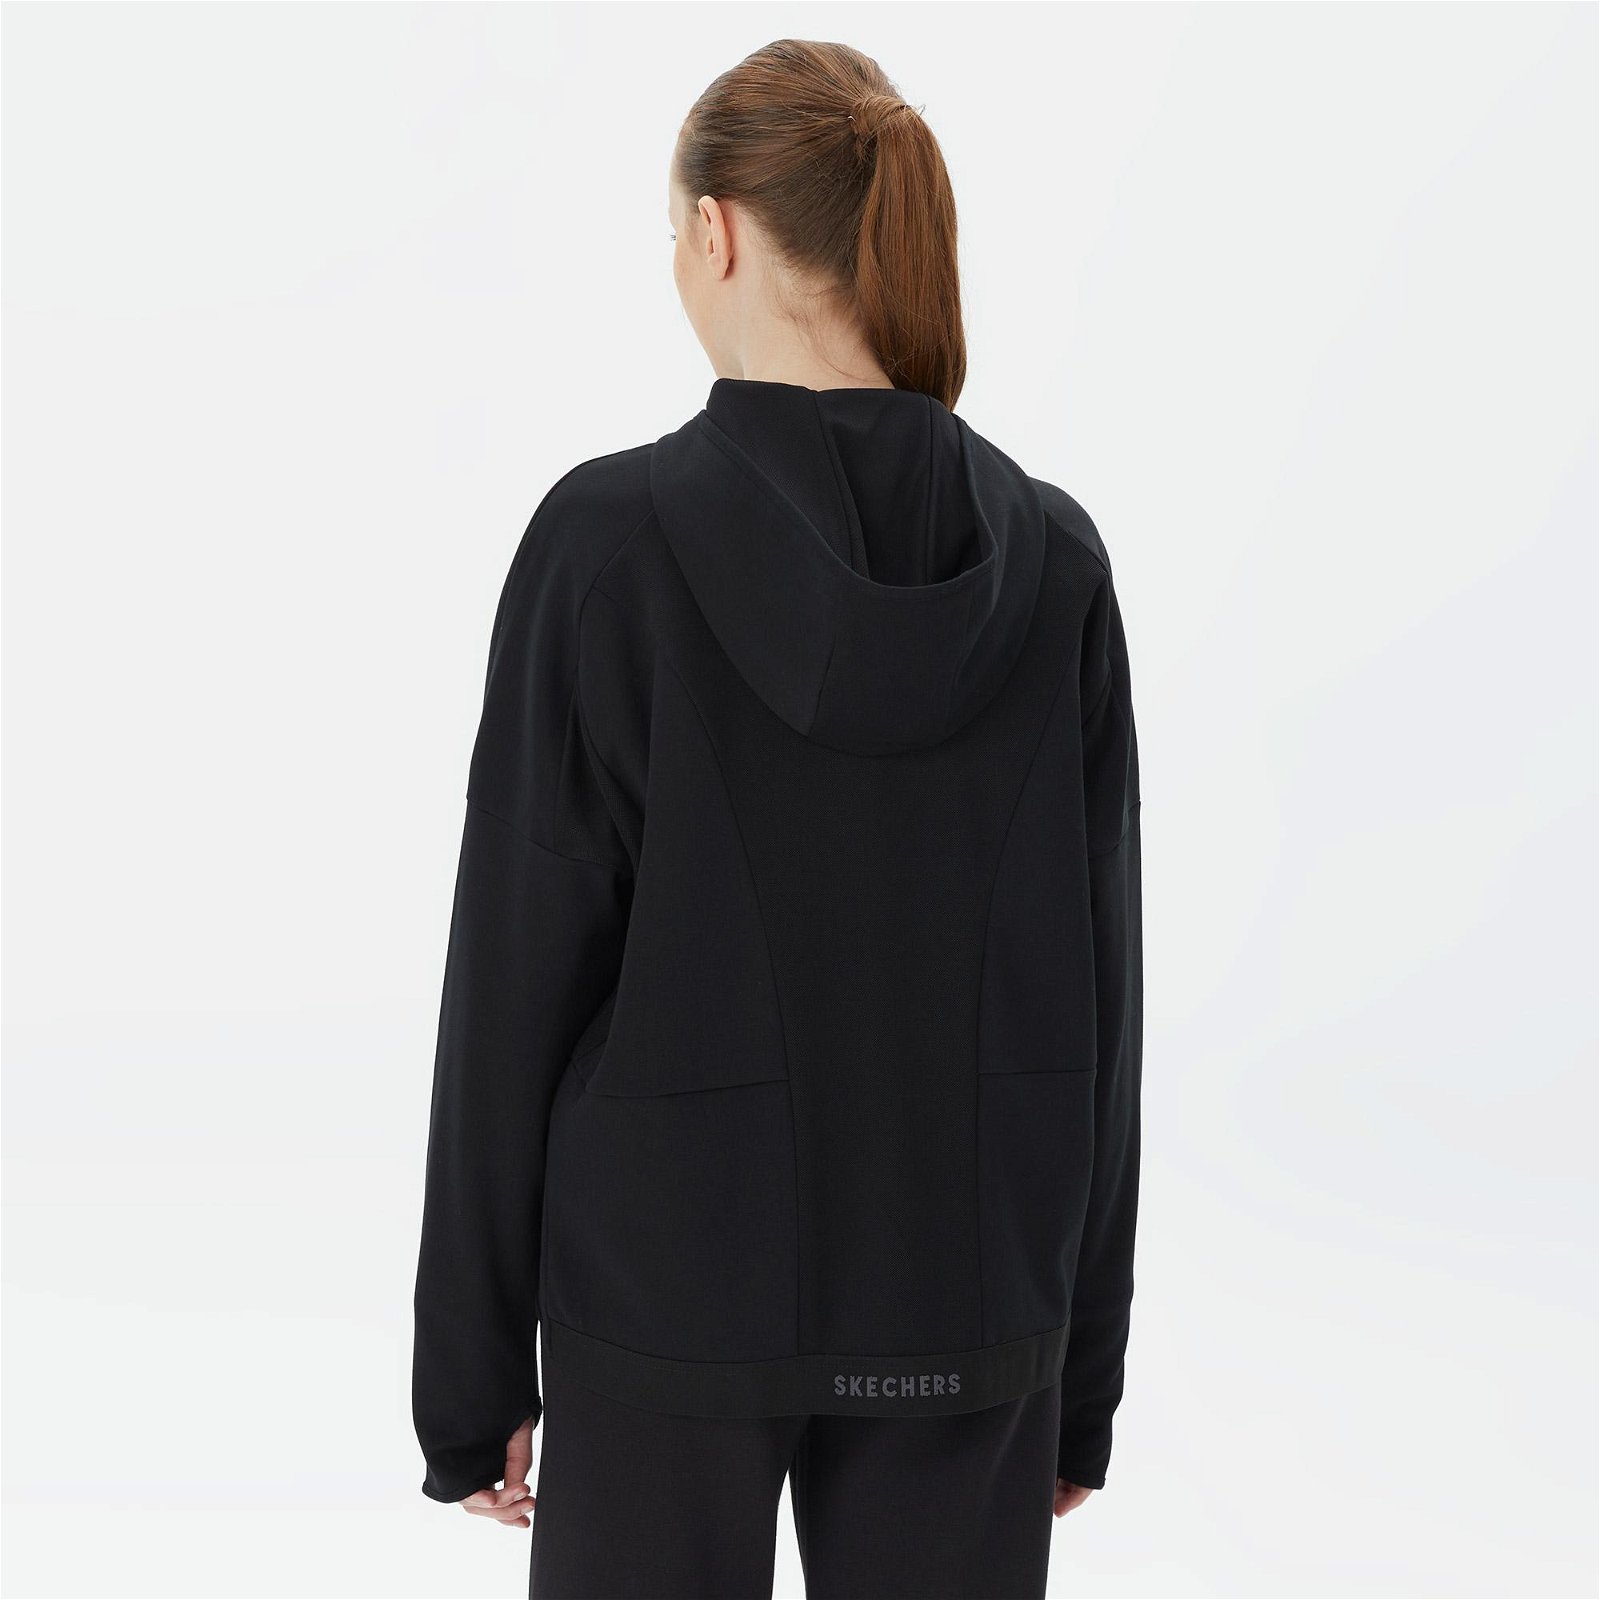 Skechers 2XI-Lock Full Zip Kadın Siyah Sweatshirt